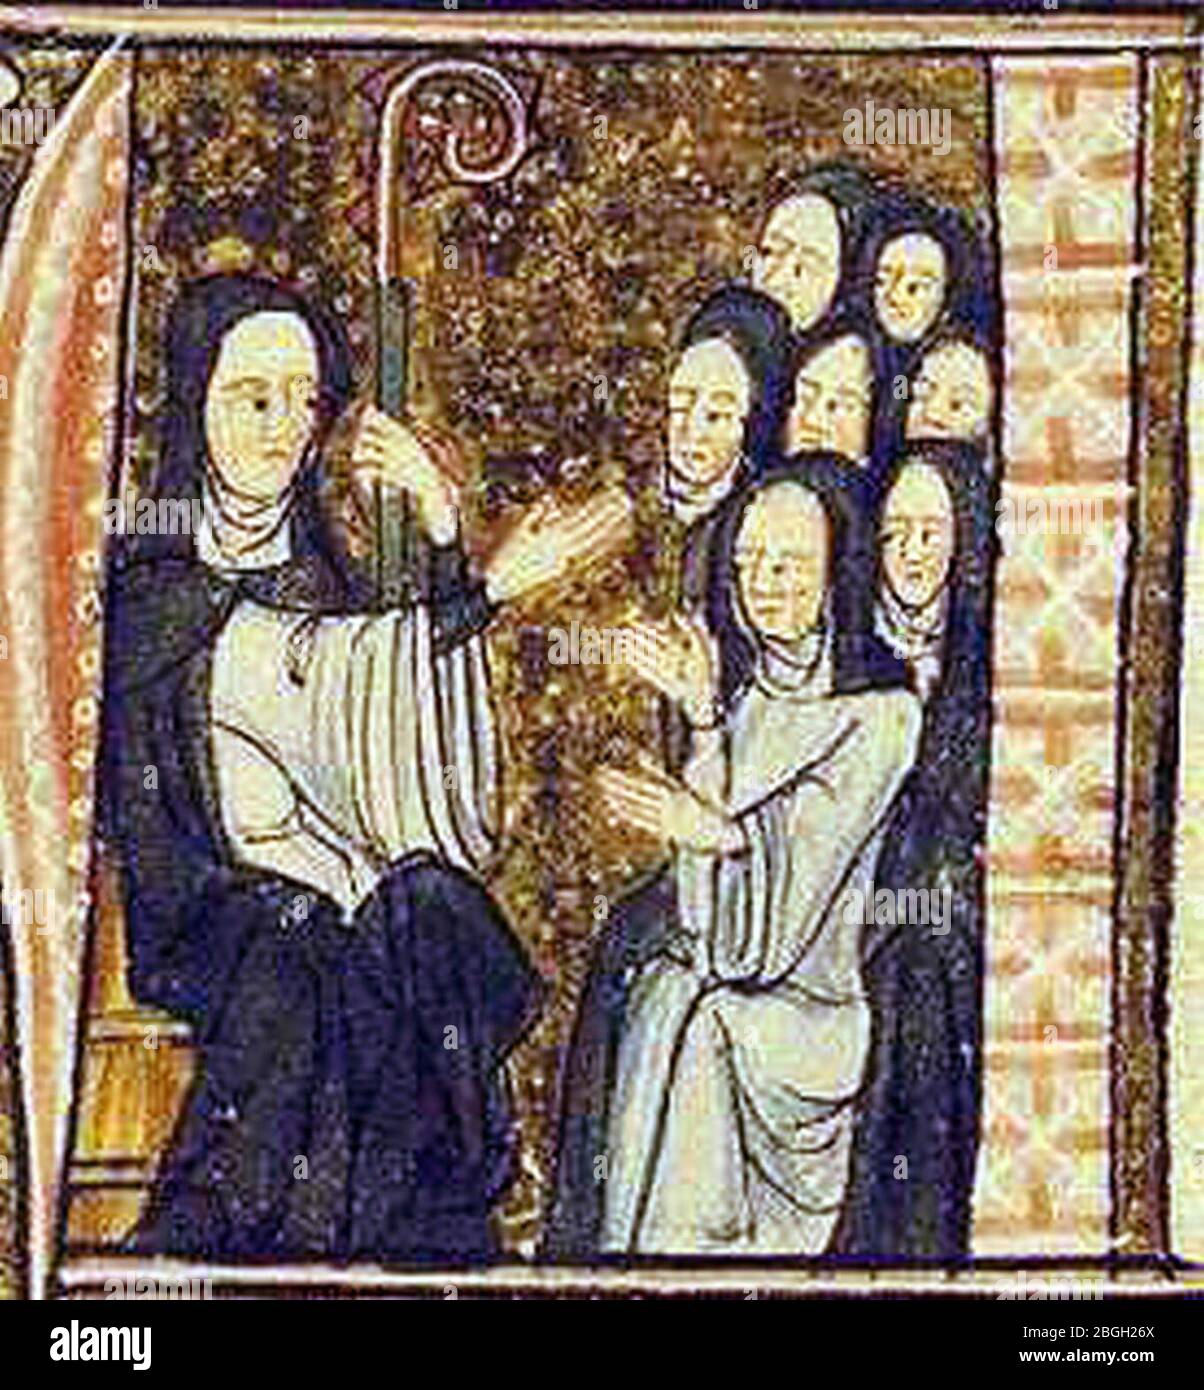 Hildegard of bingen and nuns. Stock Photo